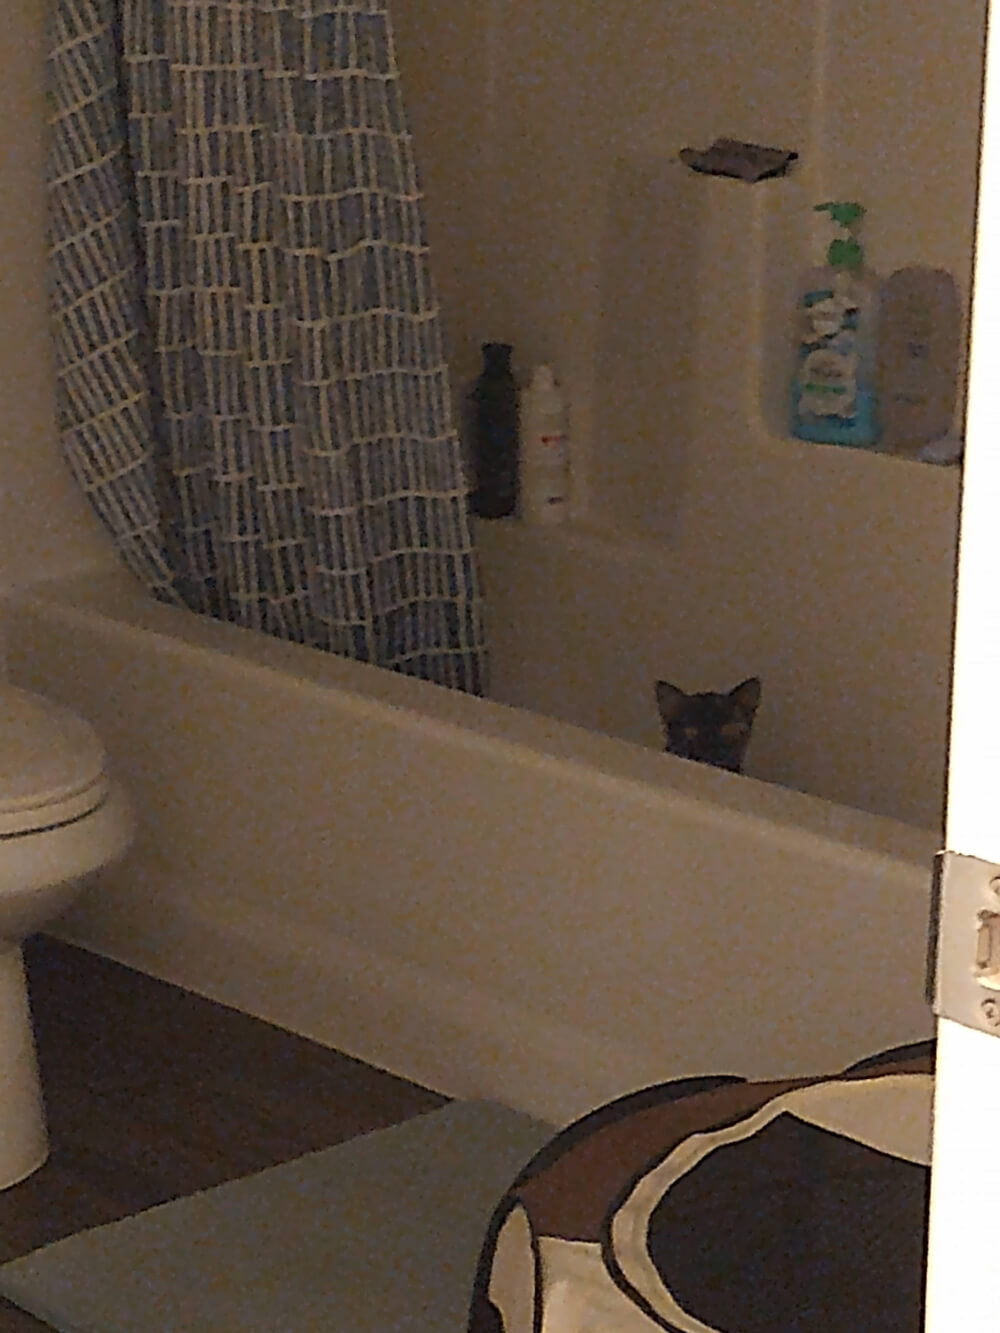 Black kittin in bathtub in dim light, looking at camera